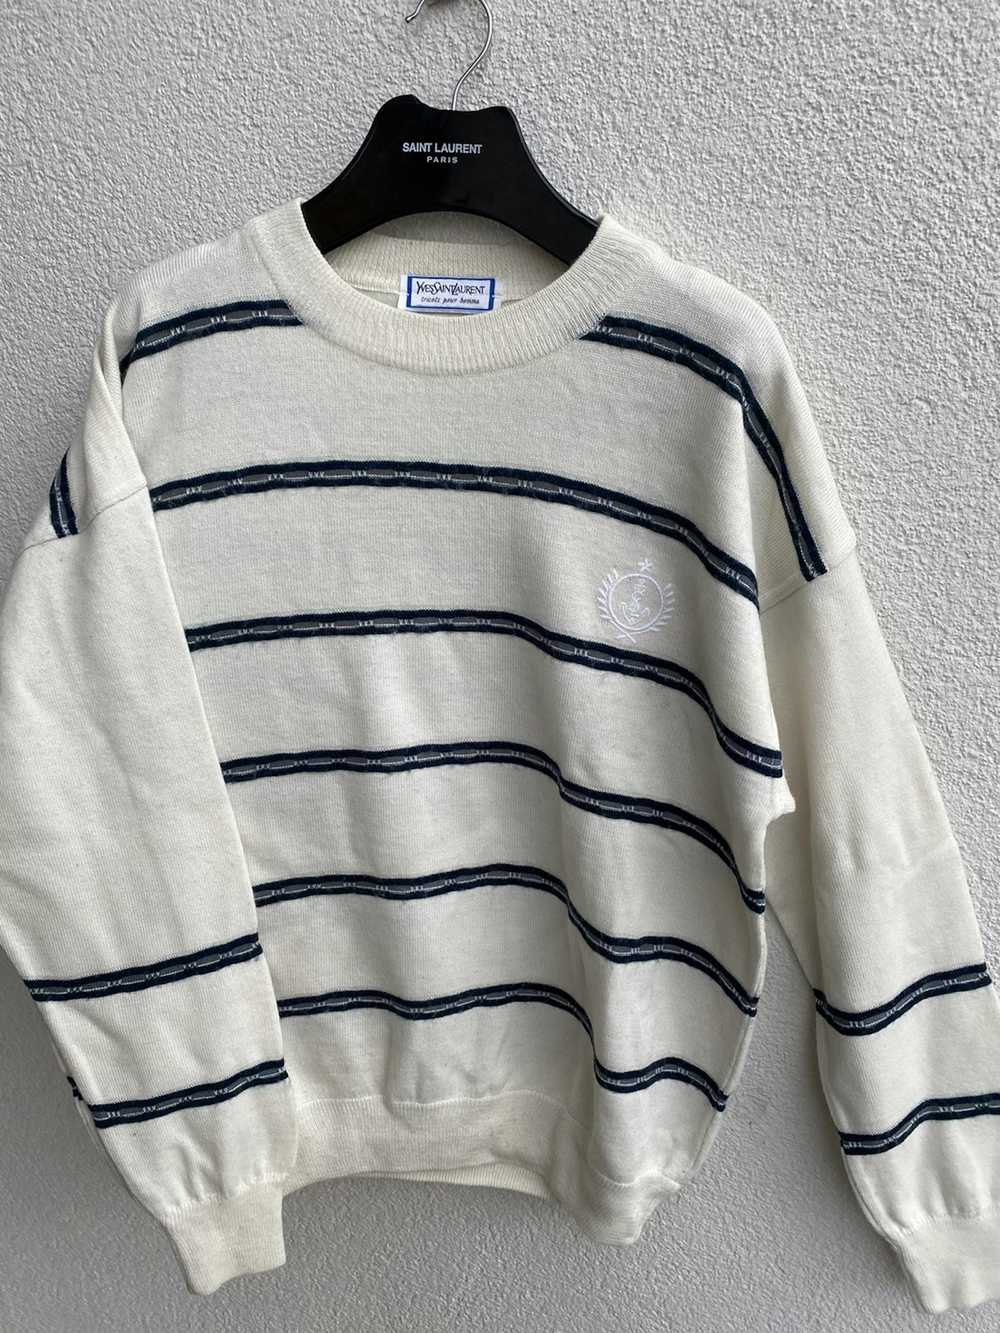 Yves Saint Laurent 90’s Wool YSL Sweater Cream Wh… - image 5